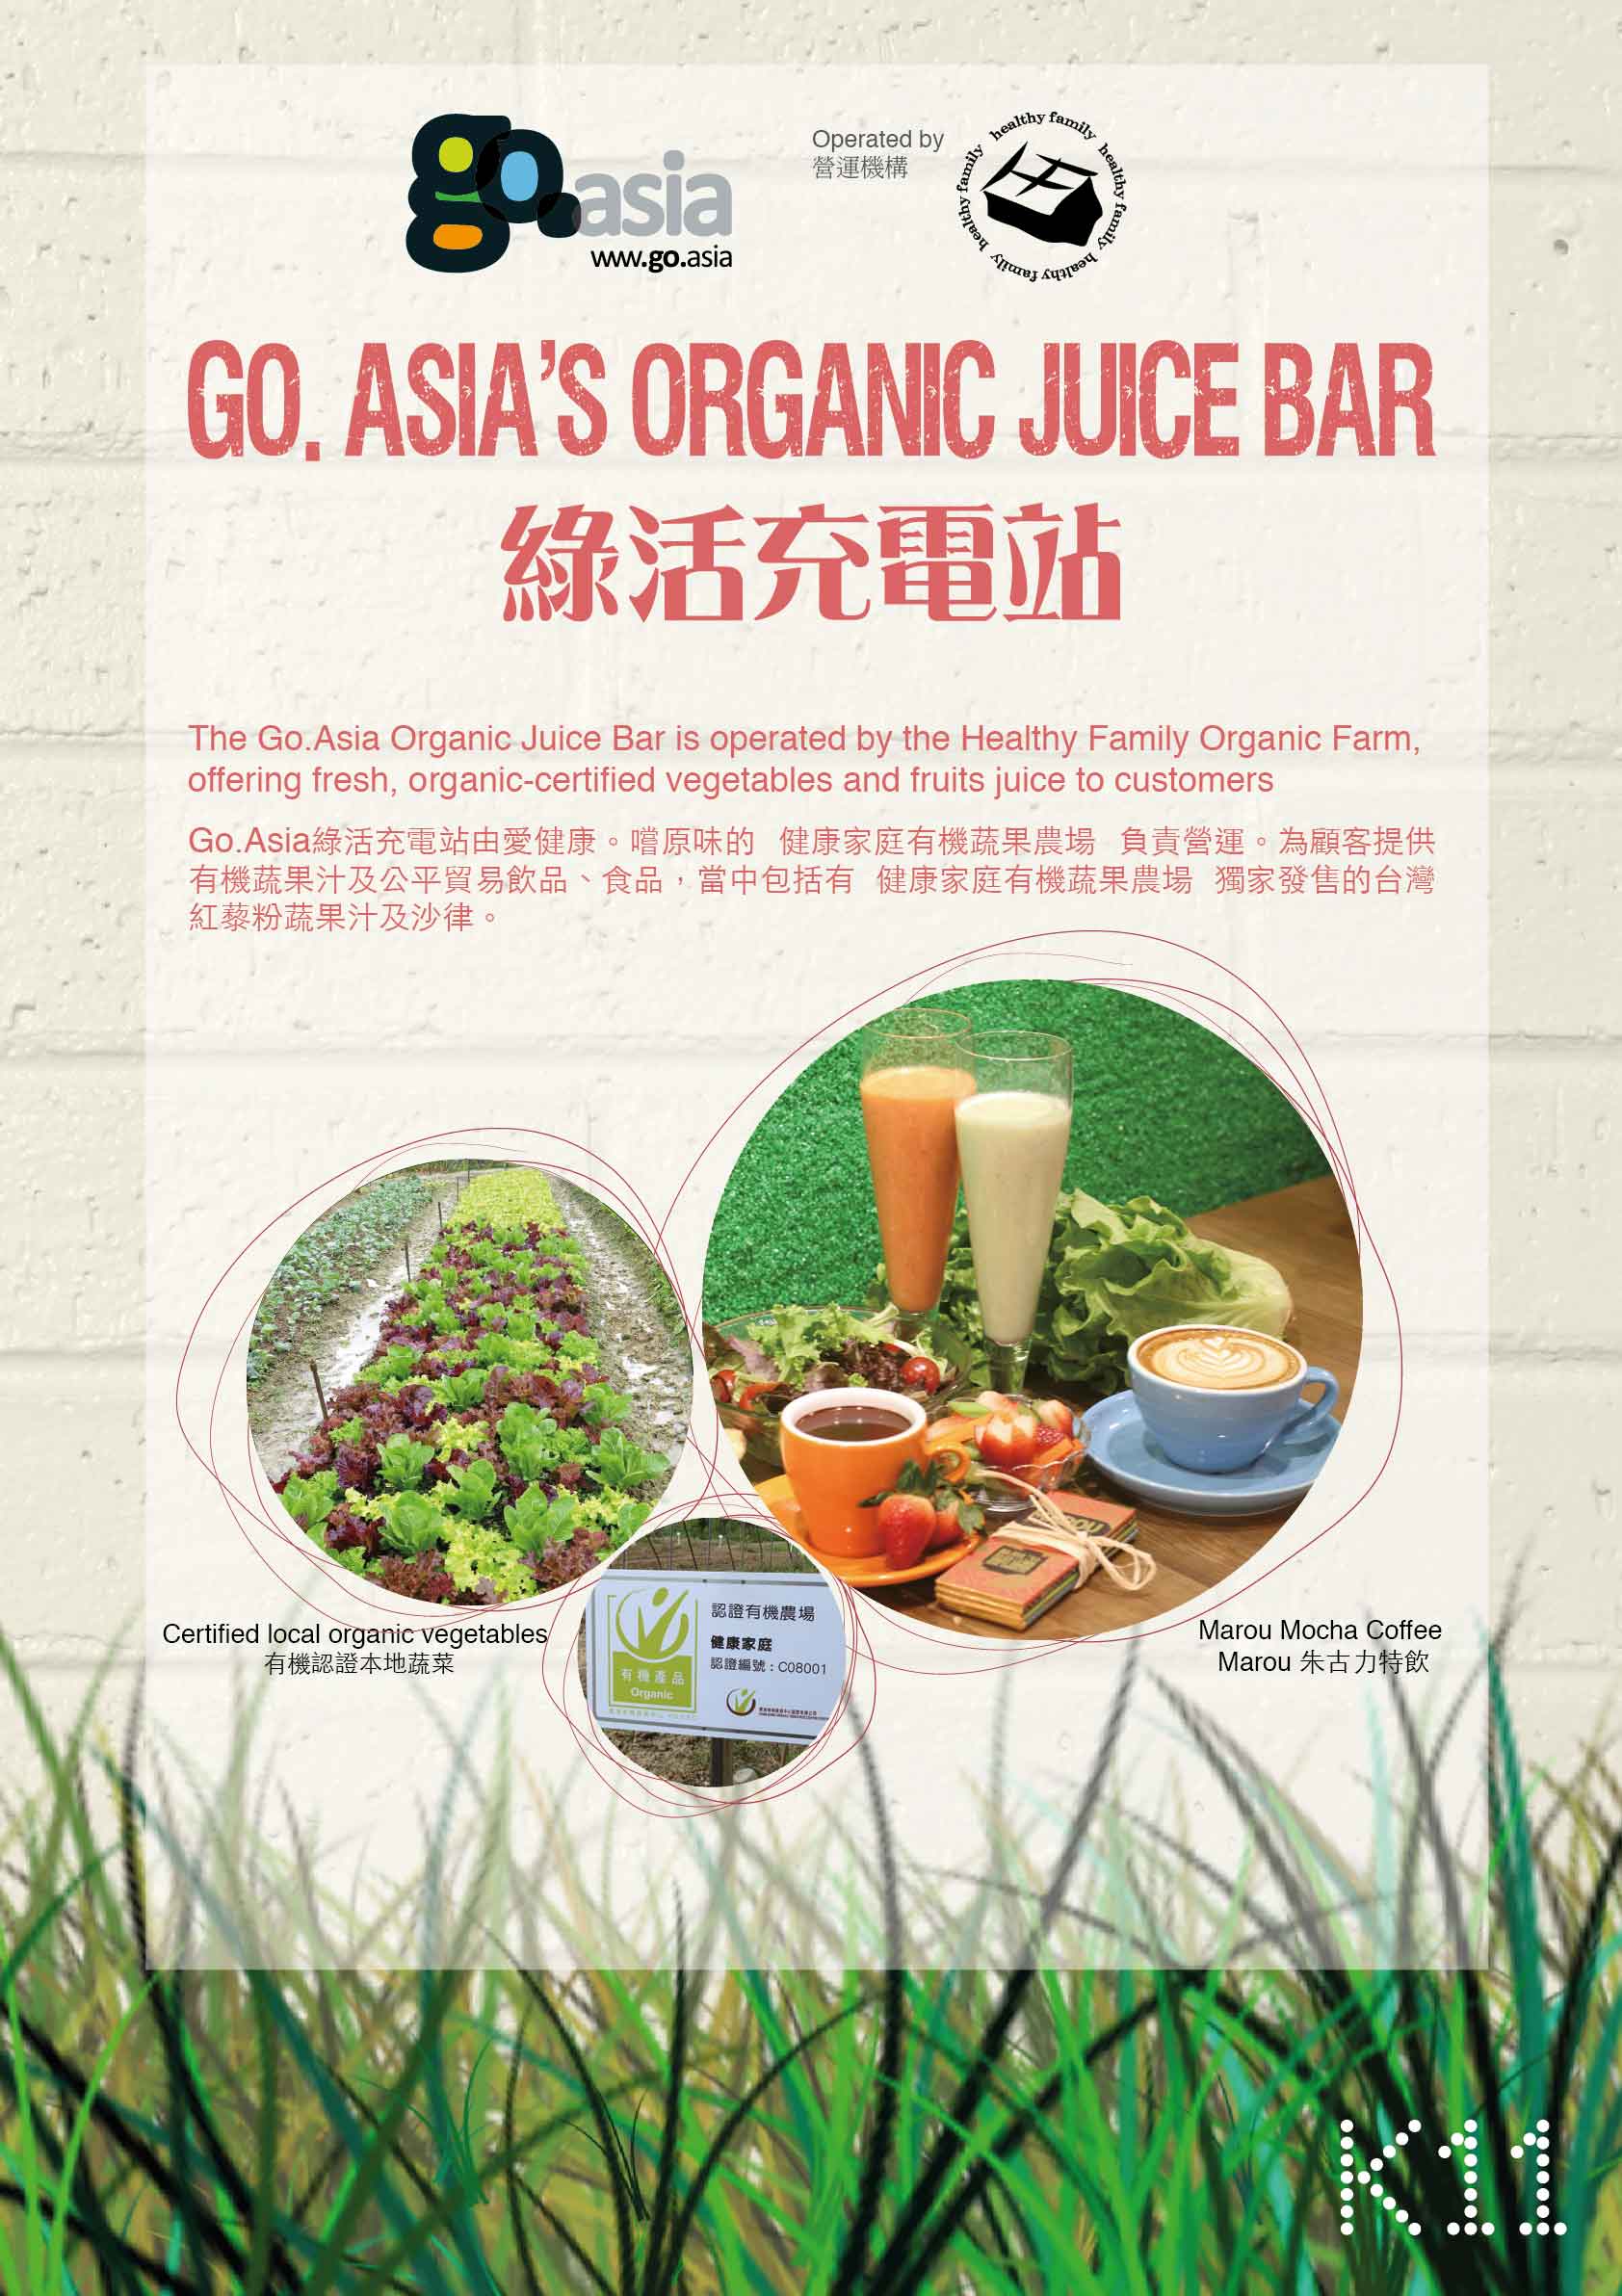 Organic Juice Bar & Fair Trade Mini-Market | Go.Asia